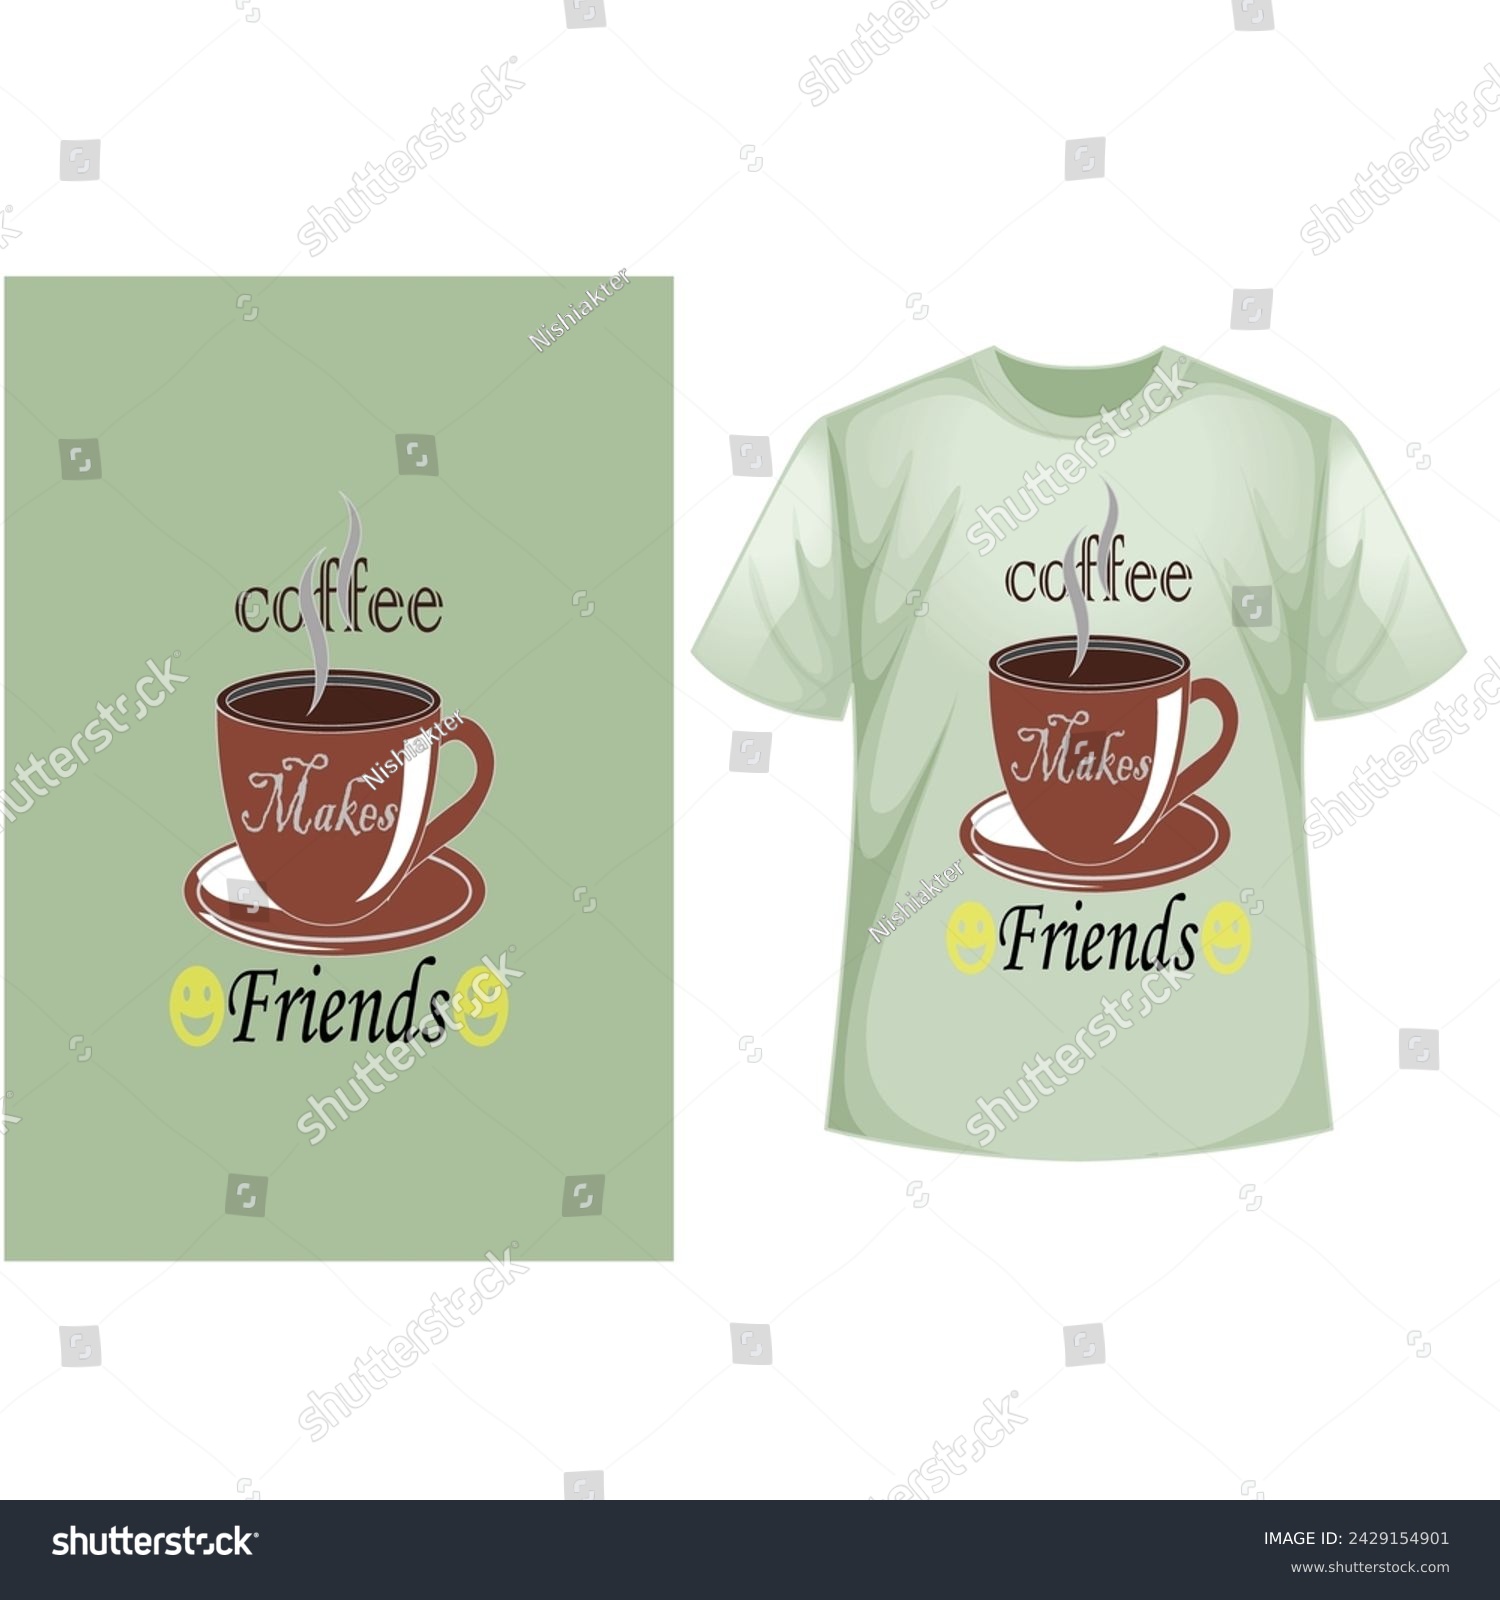 SVG of T shirt Template with a Cute Kawaii Cup Cartoon Character, Vector Illustration for Print on Demand Tee, Kawaii Apparel, Clothing, Screen Print svg